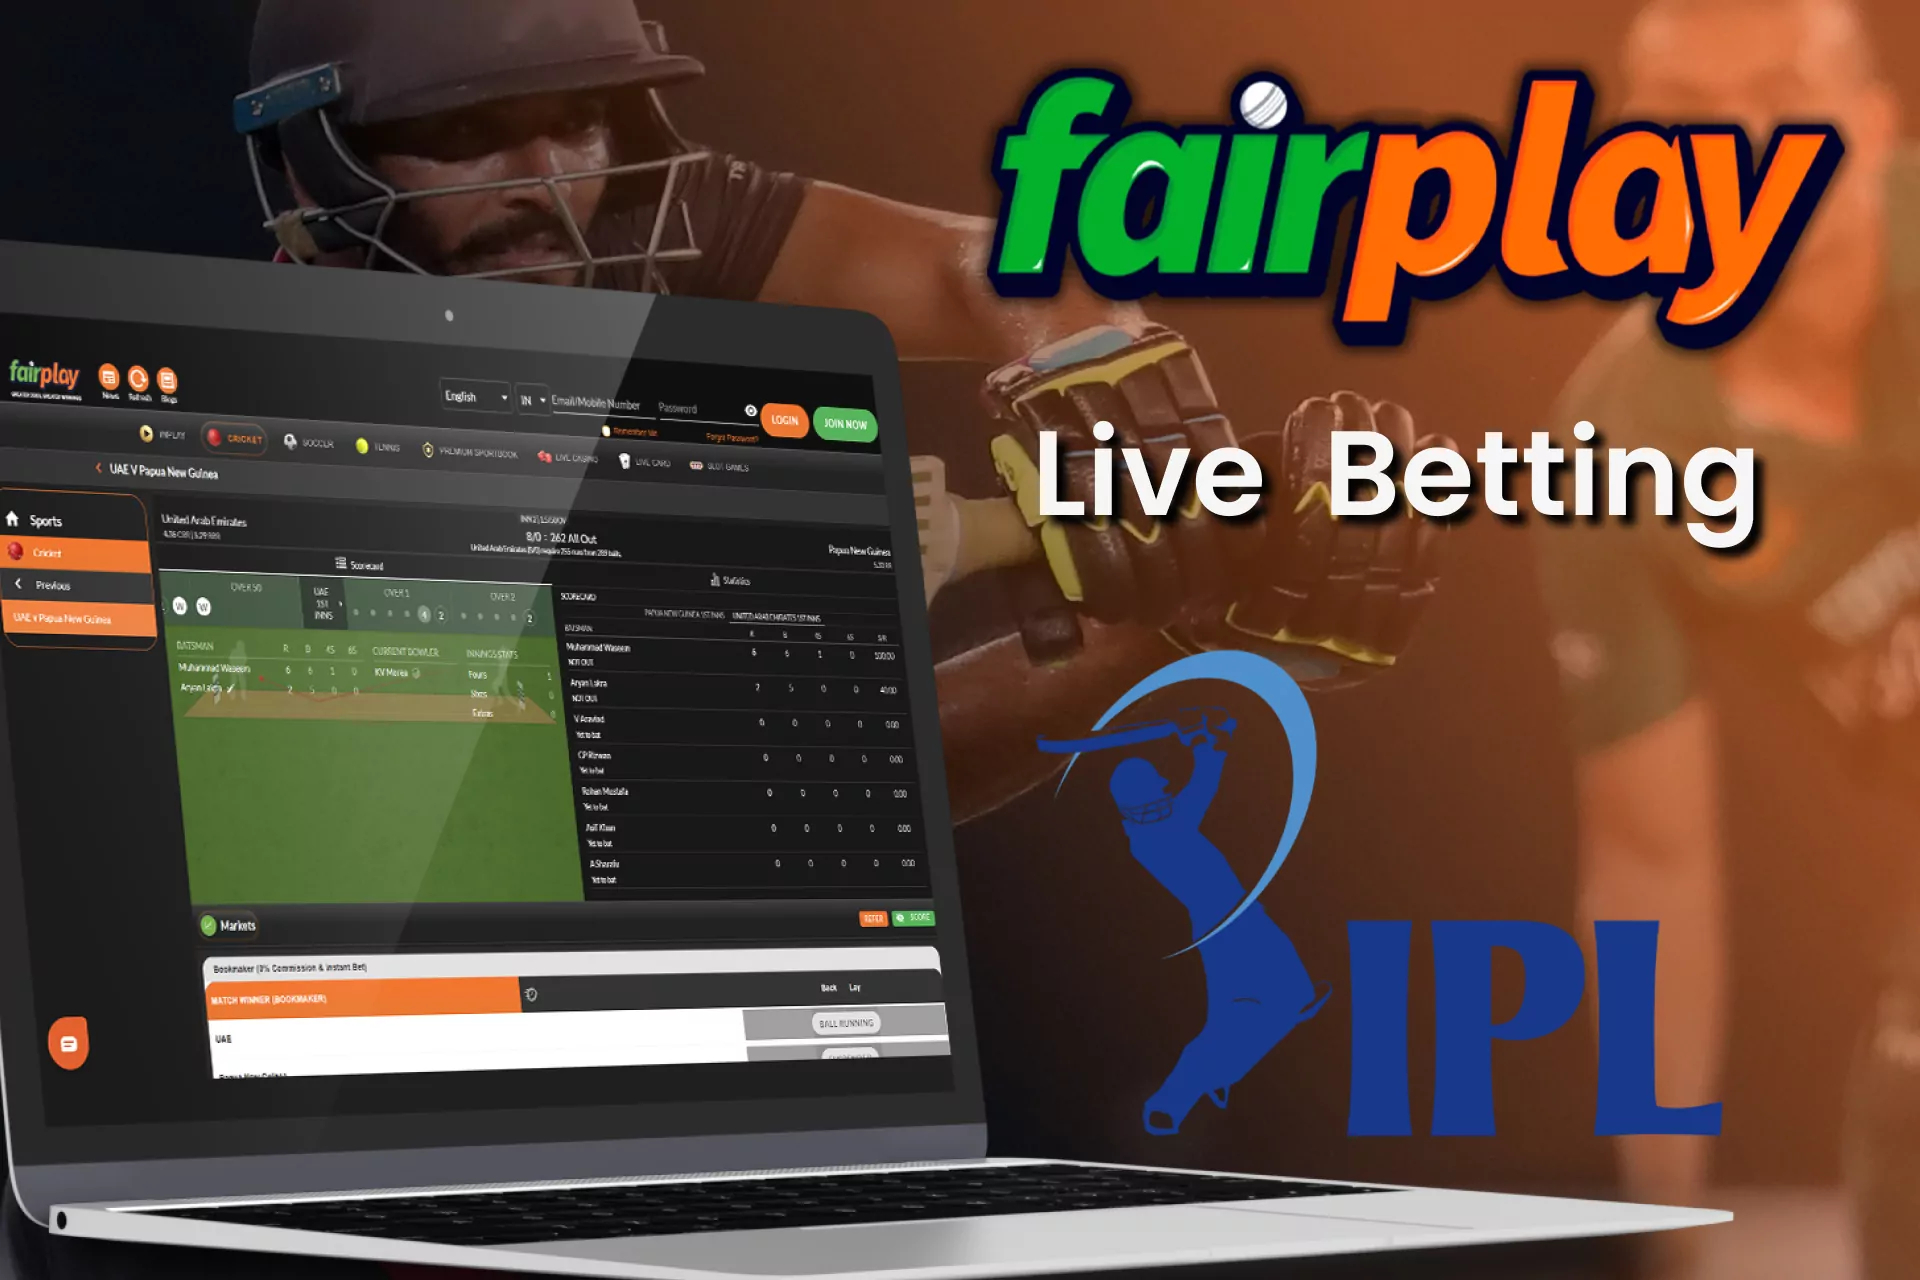 Follow IPL games live on Fairplay.